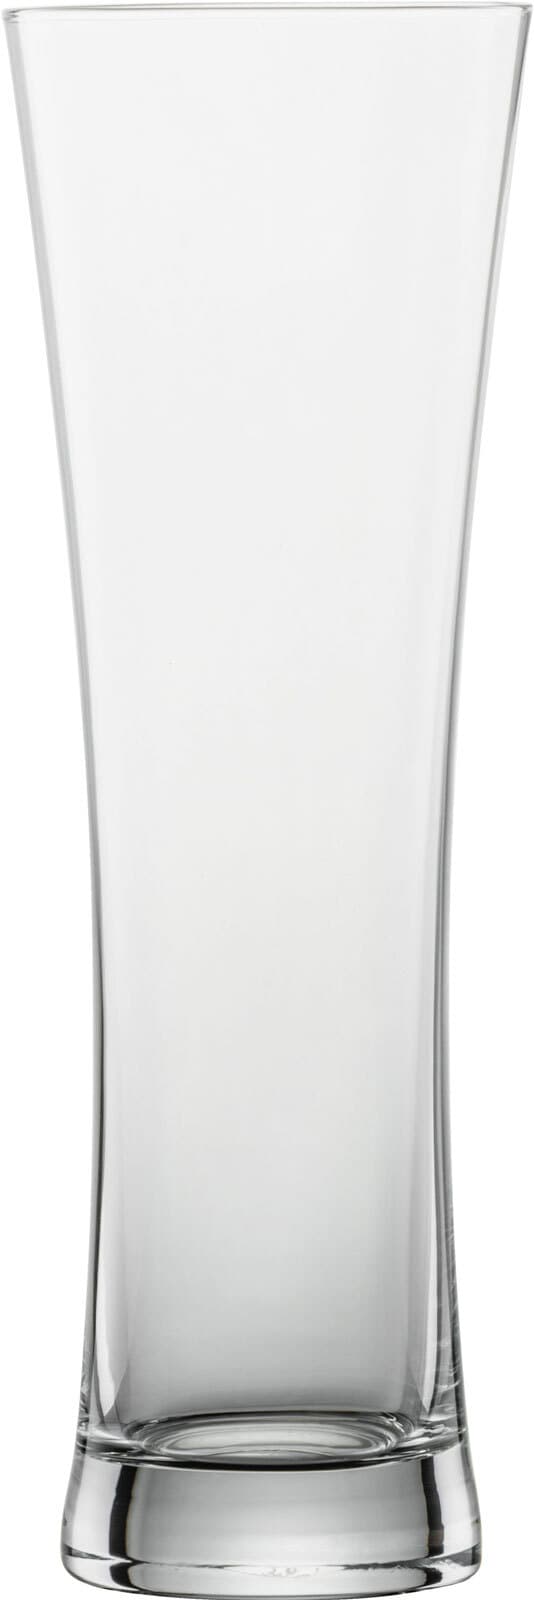 SCHOTT ZWIESEL Weizenbierglas BEER BASIC 4er Set - je 500 ml